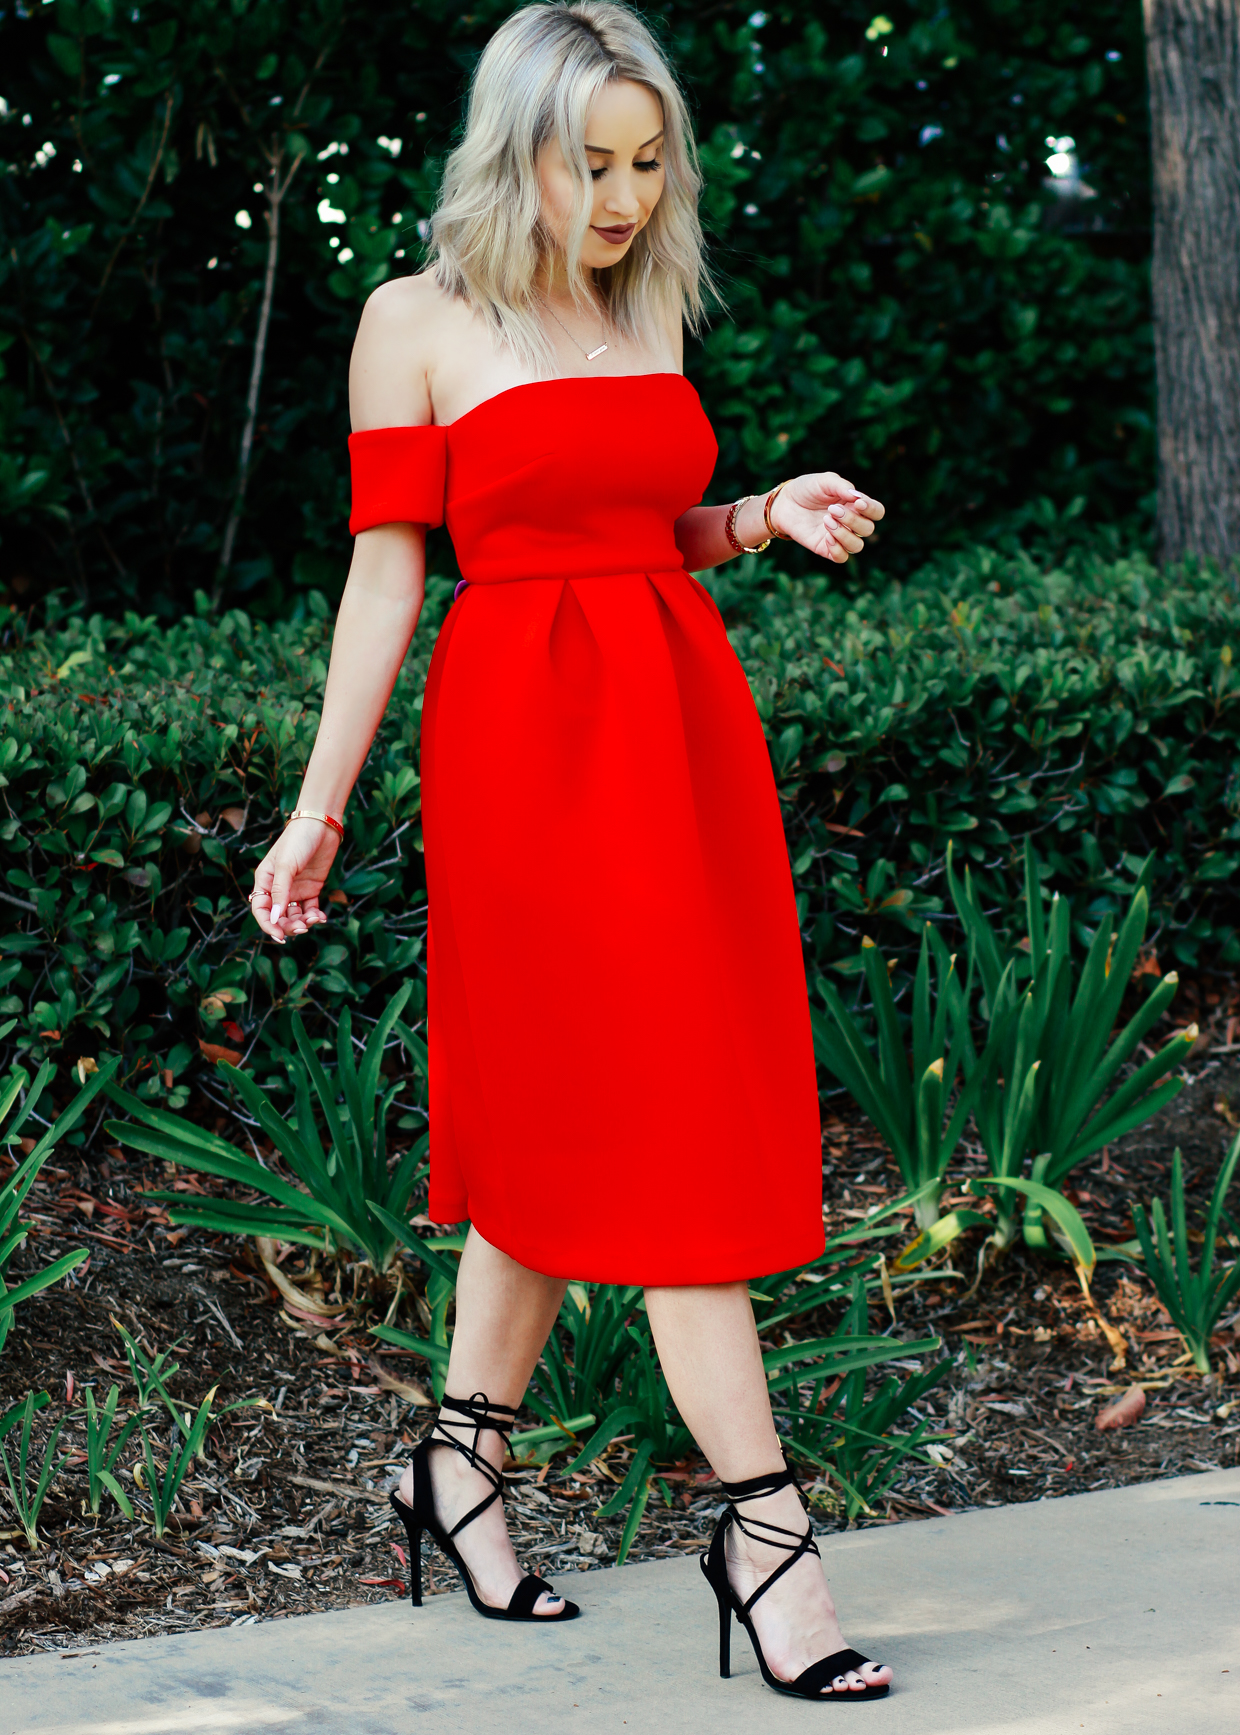 Blondie in the City | Chic Red Dress | Elegant Red Dress | @makemechic